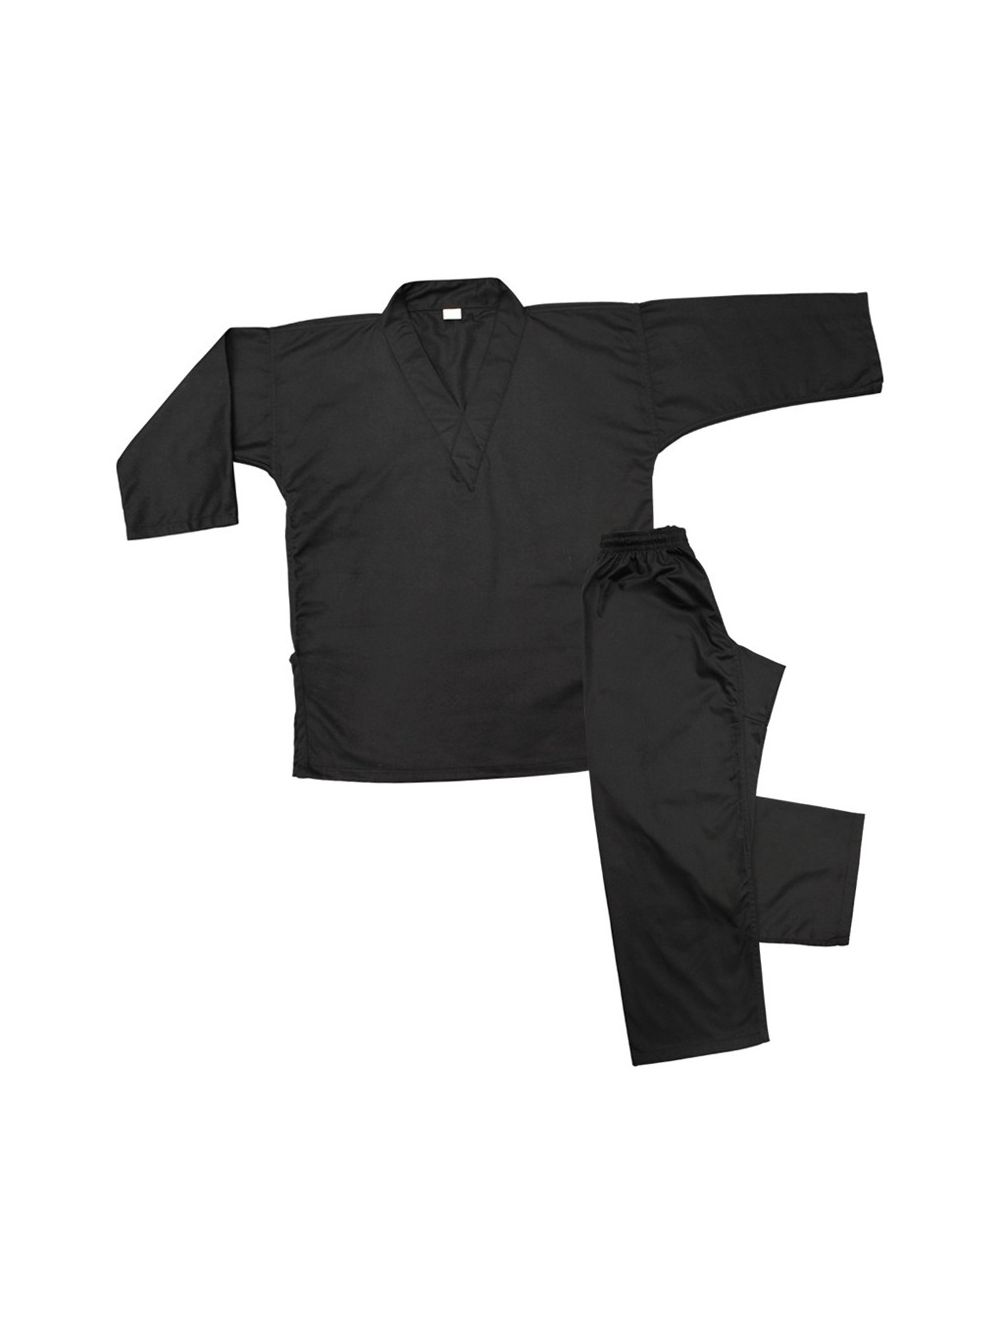 Dobok Approved Black V-Neck3 Colors Martial Arts/Taekwondo Uniform